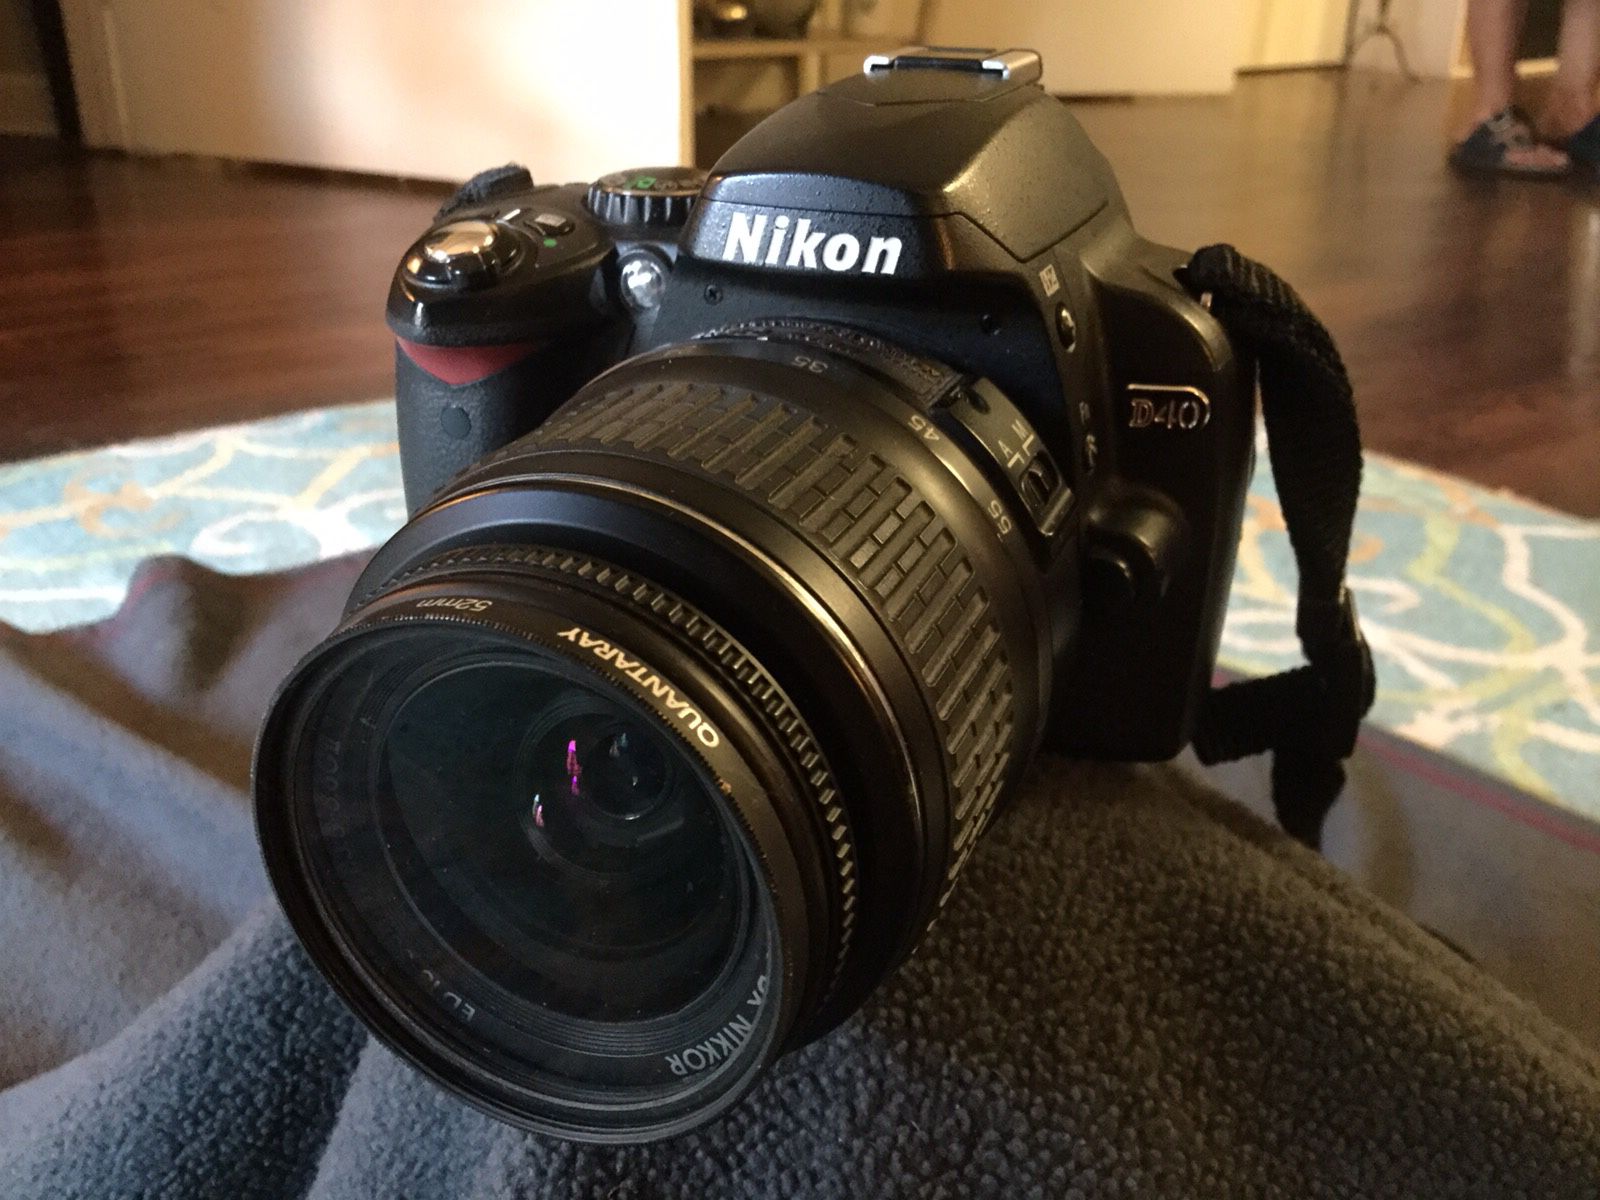 Nikon D40 6.1MP Digital SLR Camera kit with 2 zoom lens also 18-55mm lens, 55-200mm lens, camera battery.